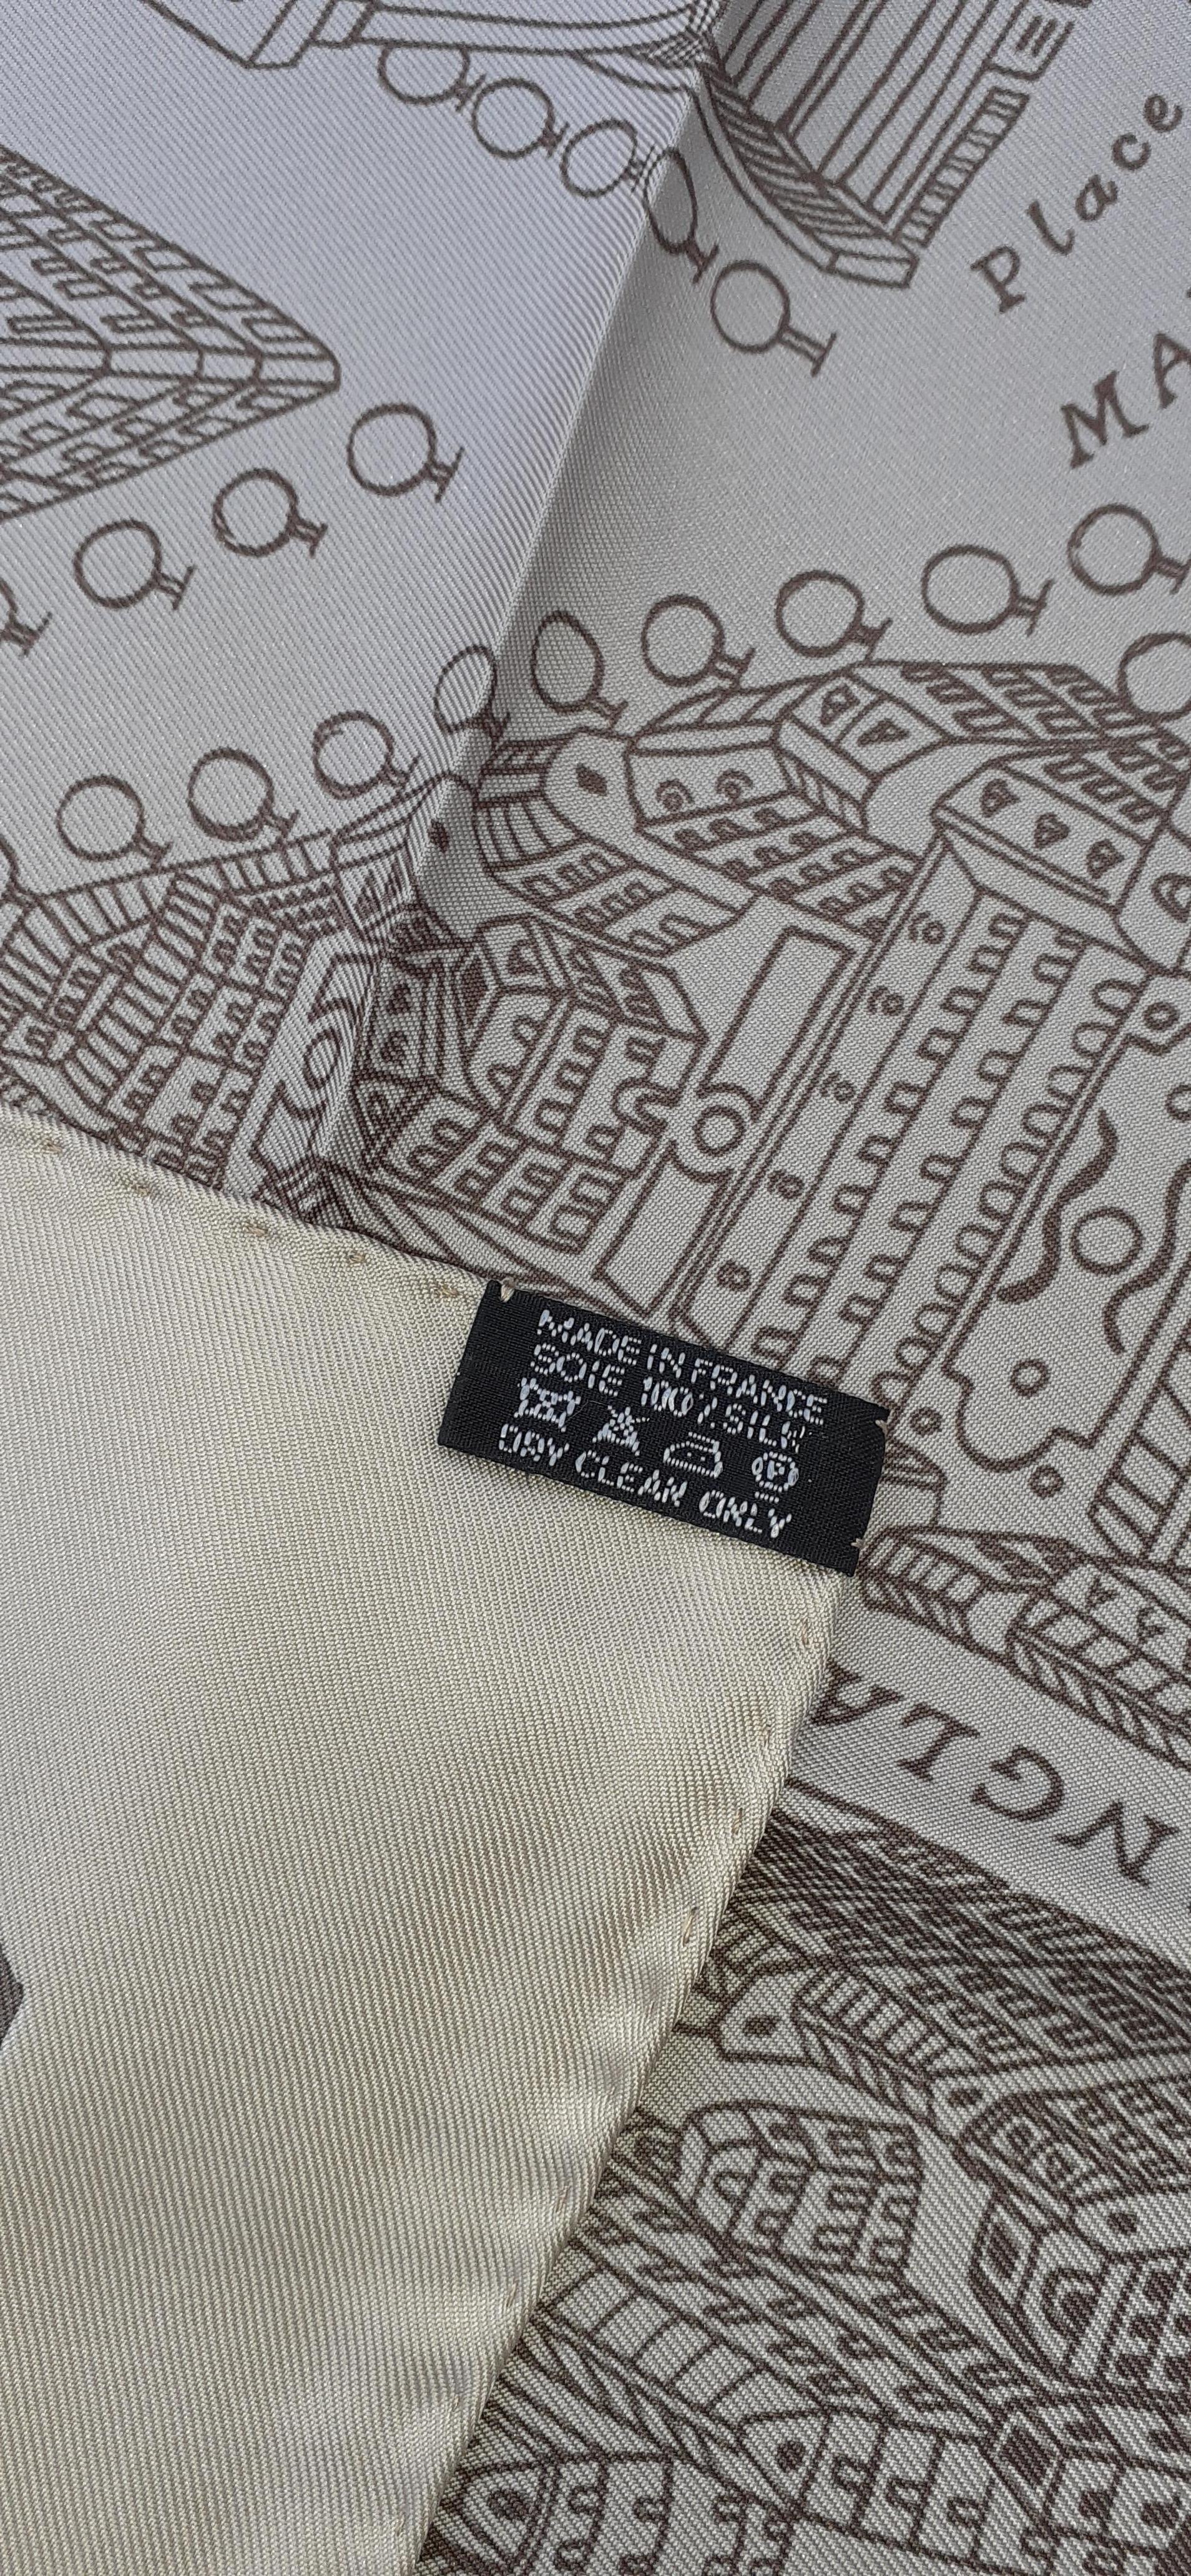 Hermès Silk Scarf De Passage A Paris Nathalie Vialars Beige Brown 35 inches 3